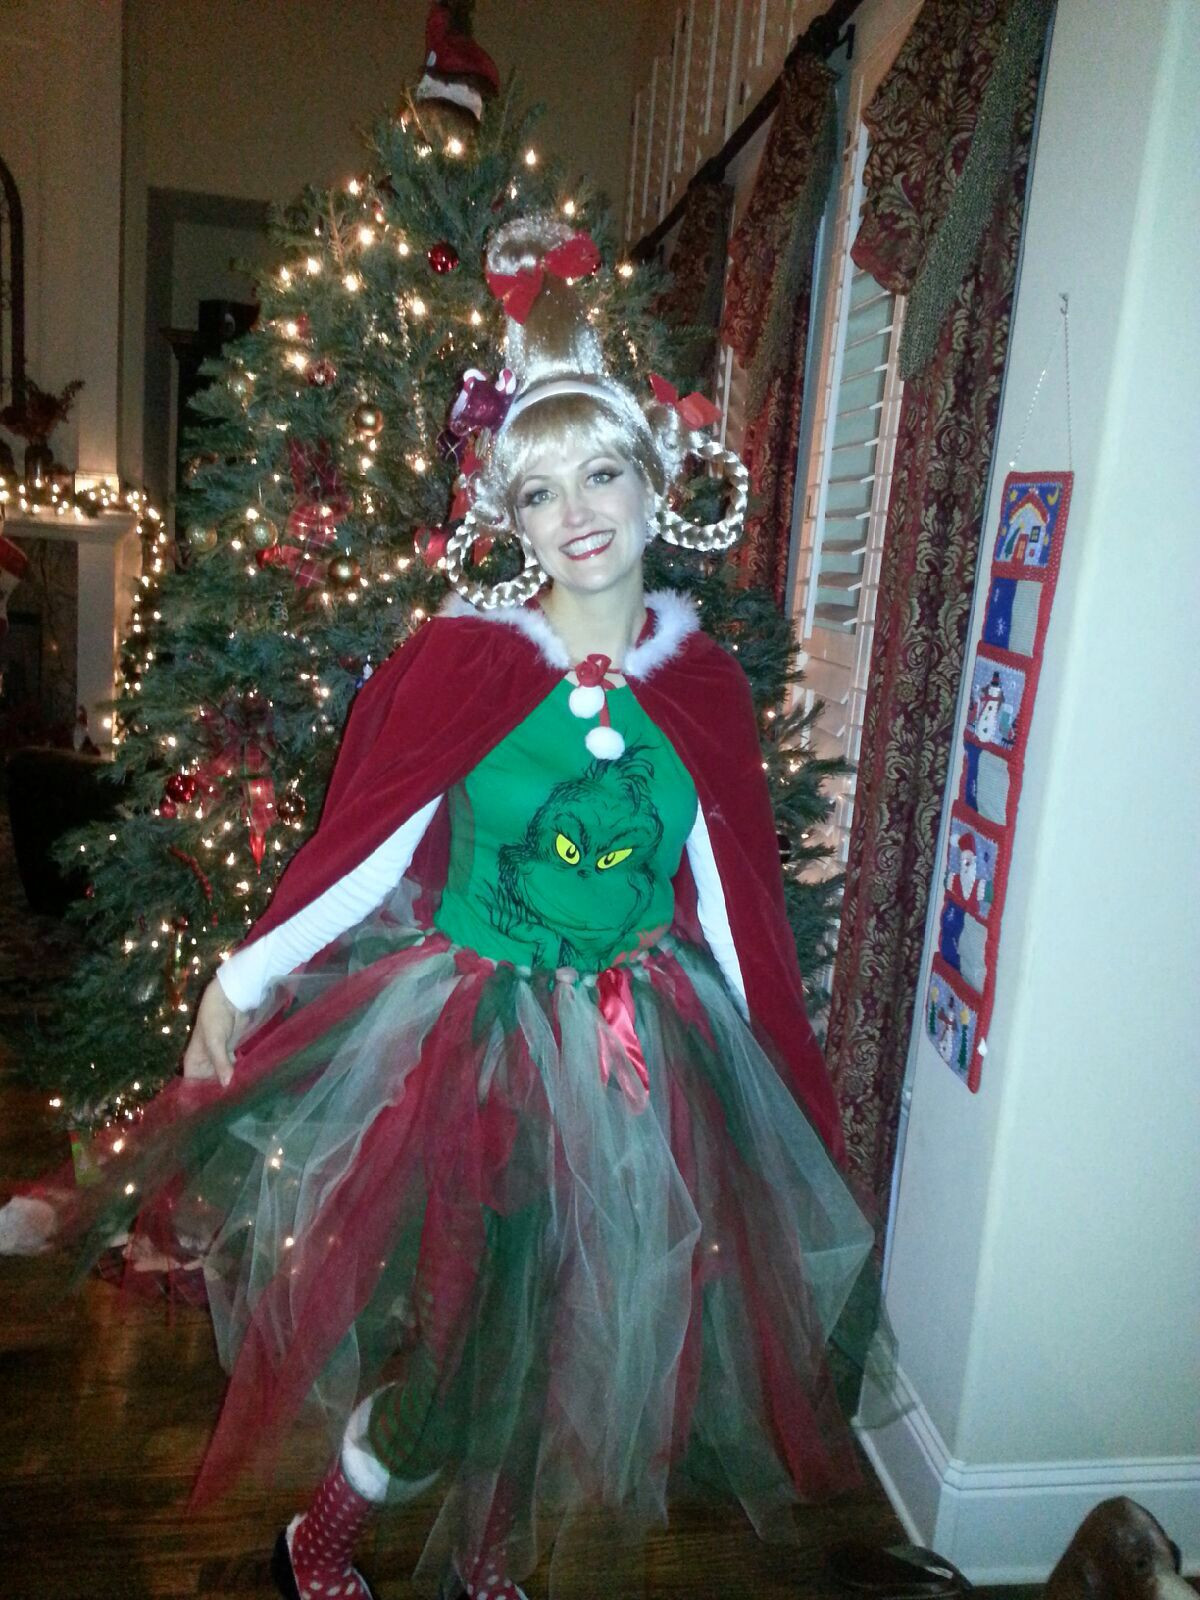 Cindy Lou Who Costume DIY
 Cindy Lou Who costume Christmas party ideas